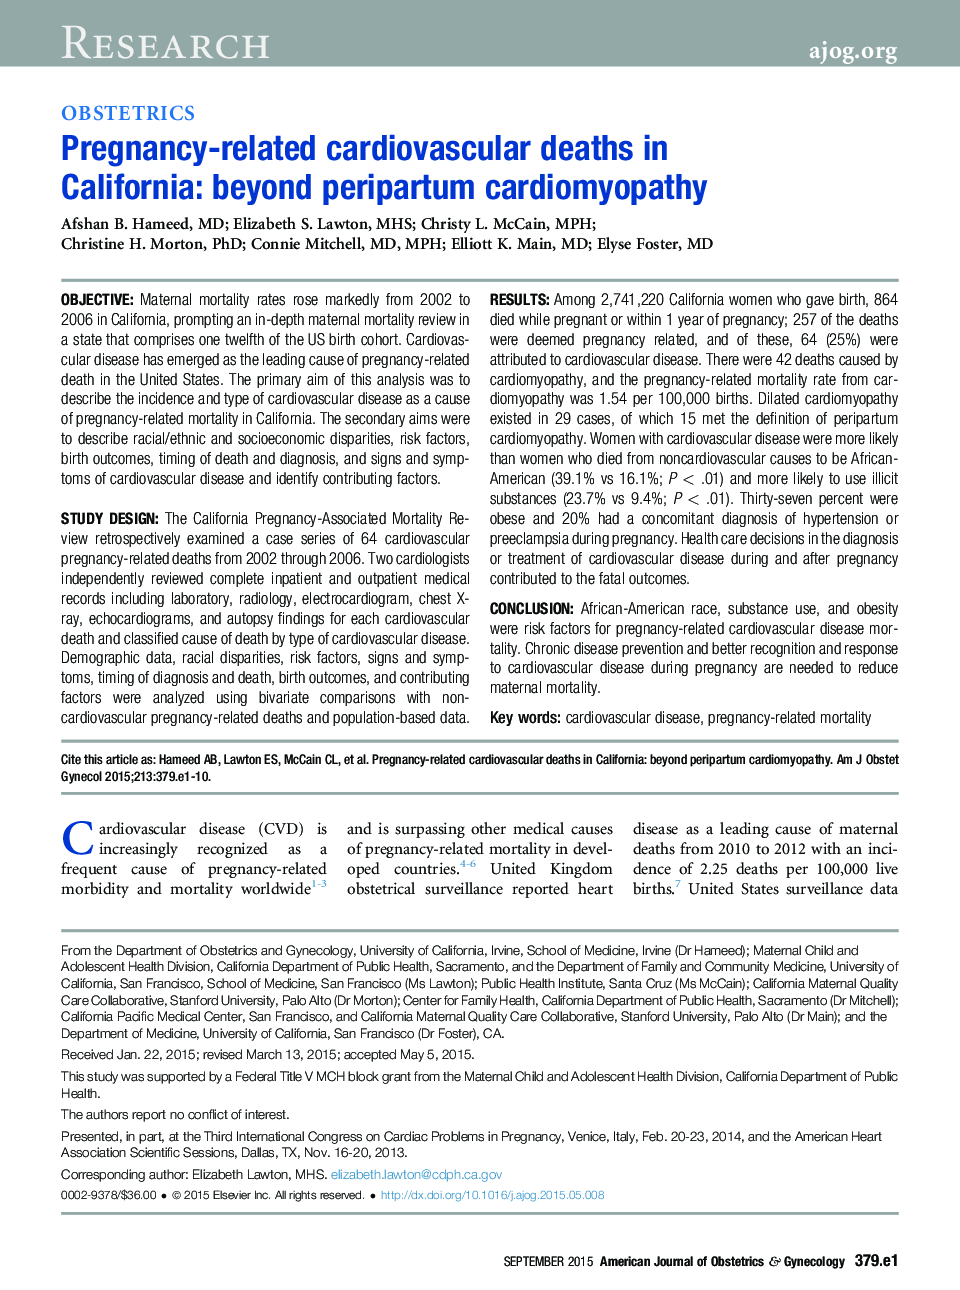 Pregnancy-related cardiovascular deaths in California: beyond peripartum cardiomyopathy